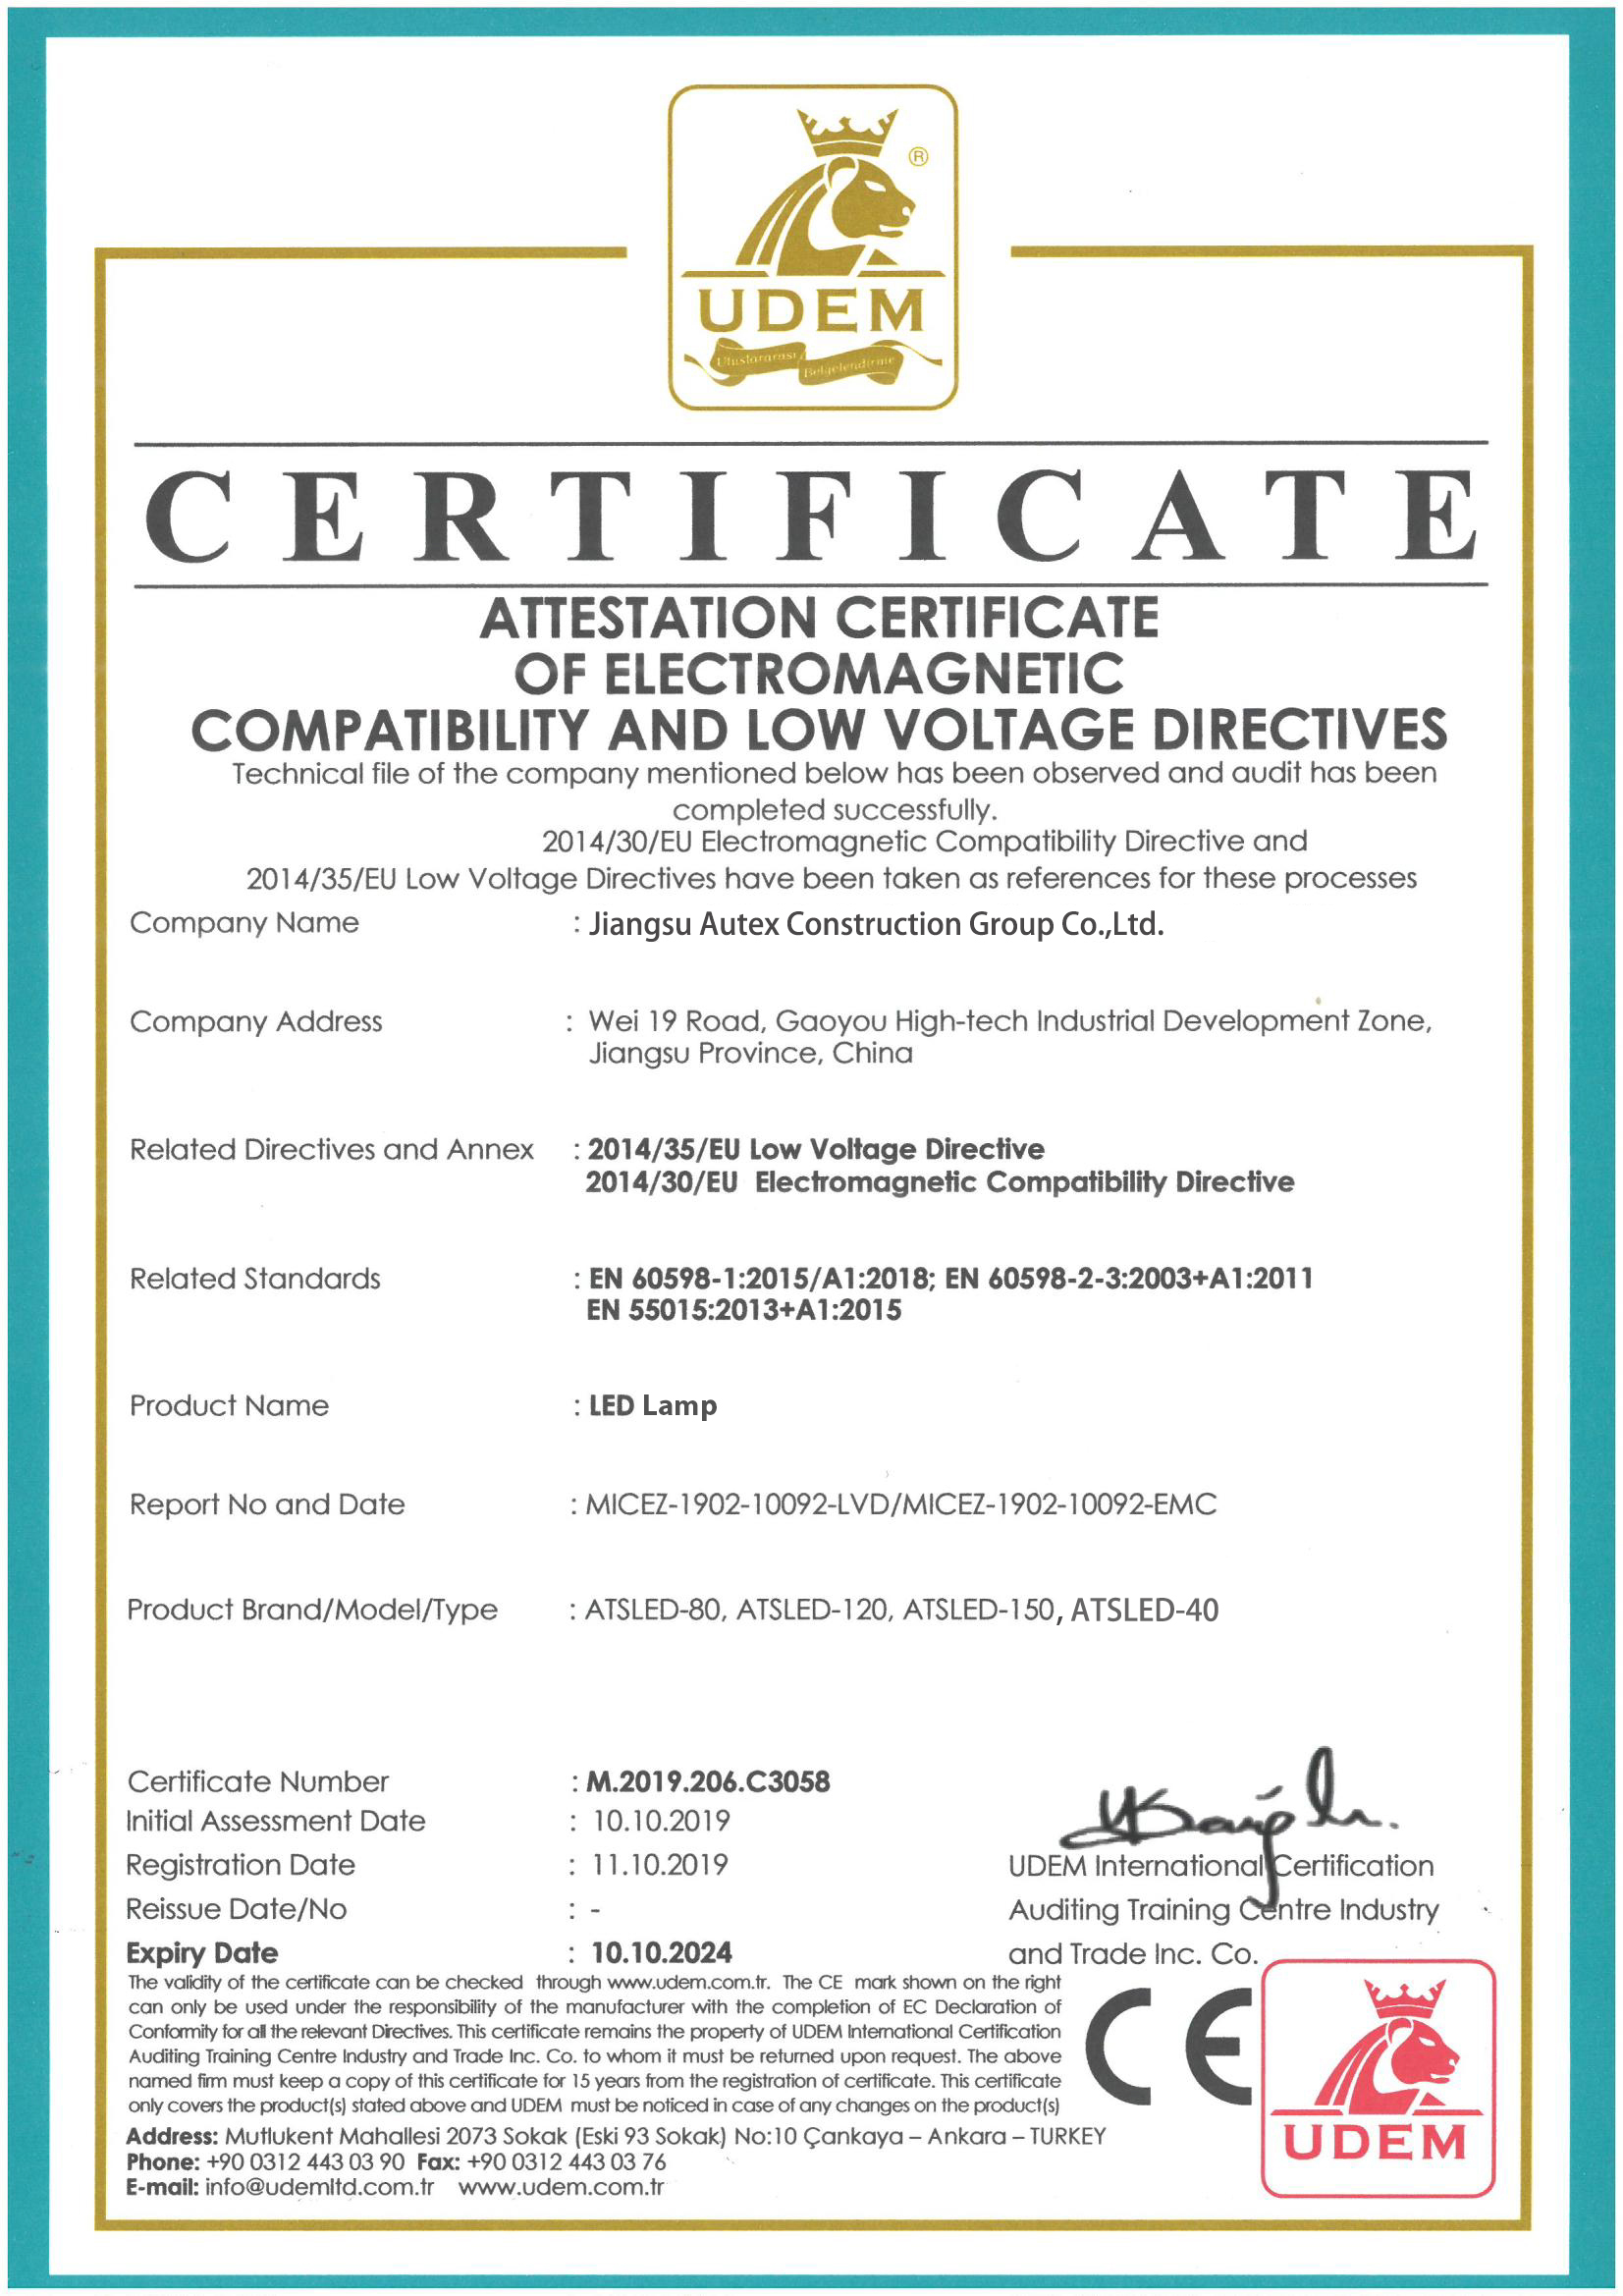 Autex Solar Technology Co., Ltd.: A Trusted Company Providing Durable, High Quality, Long Warranty Solar Products